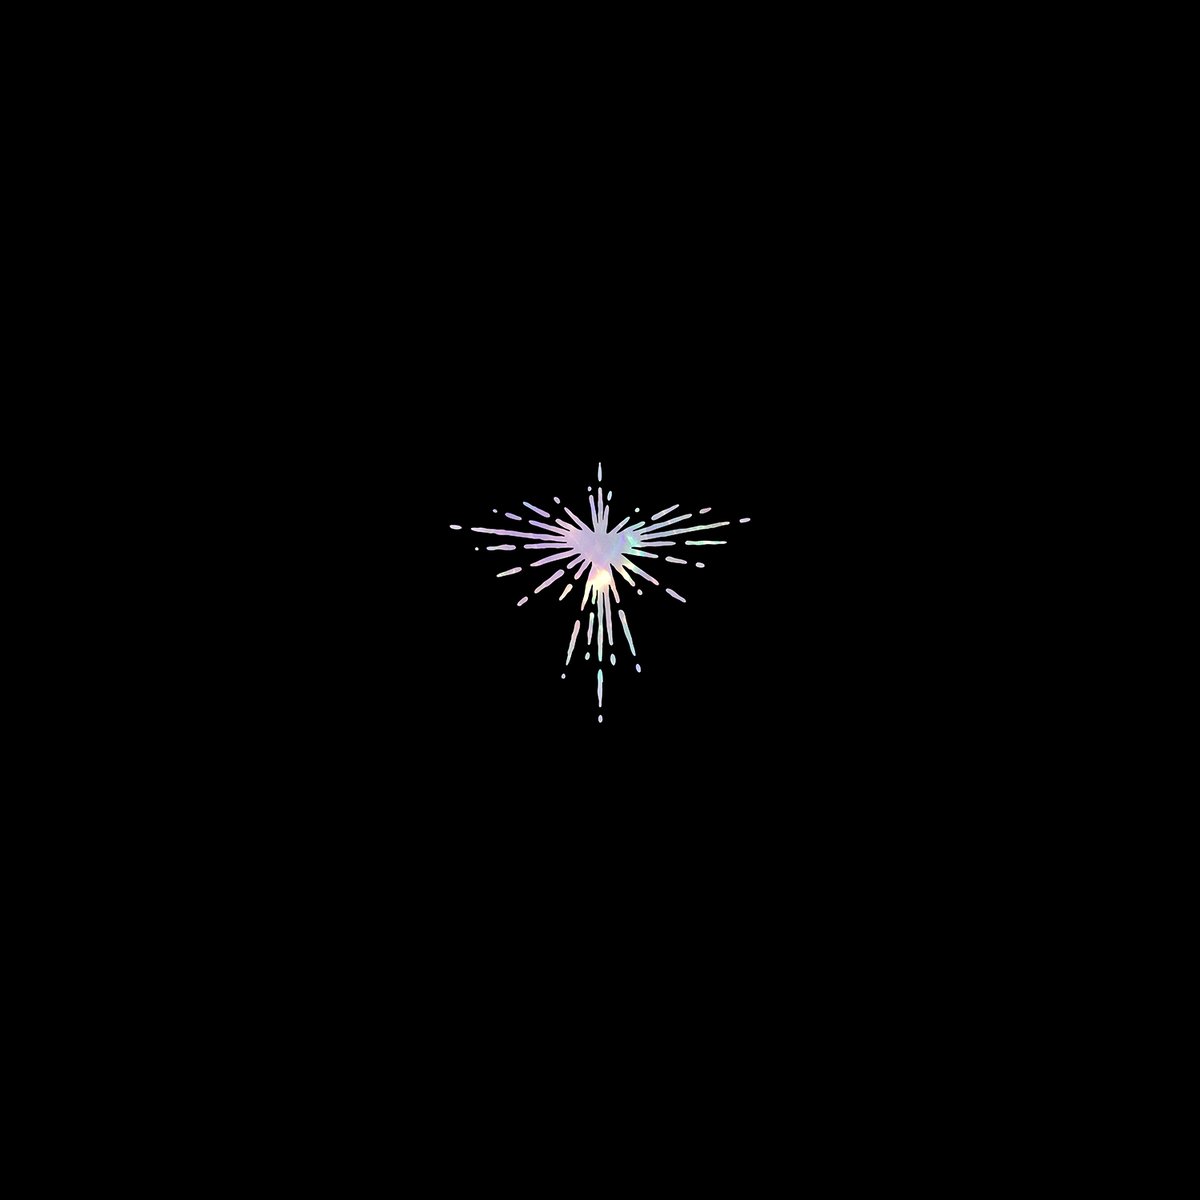 #NowPlaying_BVGH 
『Lux Prima』(2019)
Karen O, Danger Mouse
96.0kHz/24bit
#PsychedelicRock #OrchestralPop #Triphop